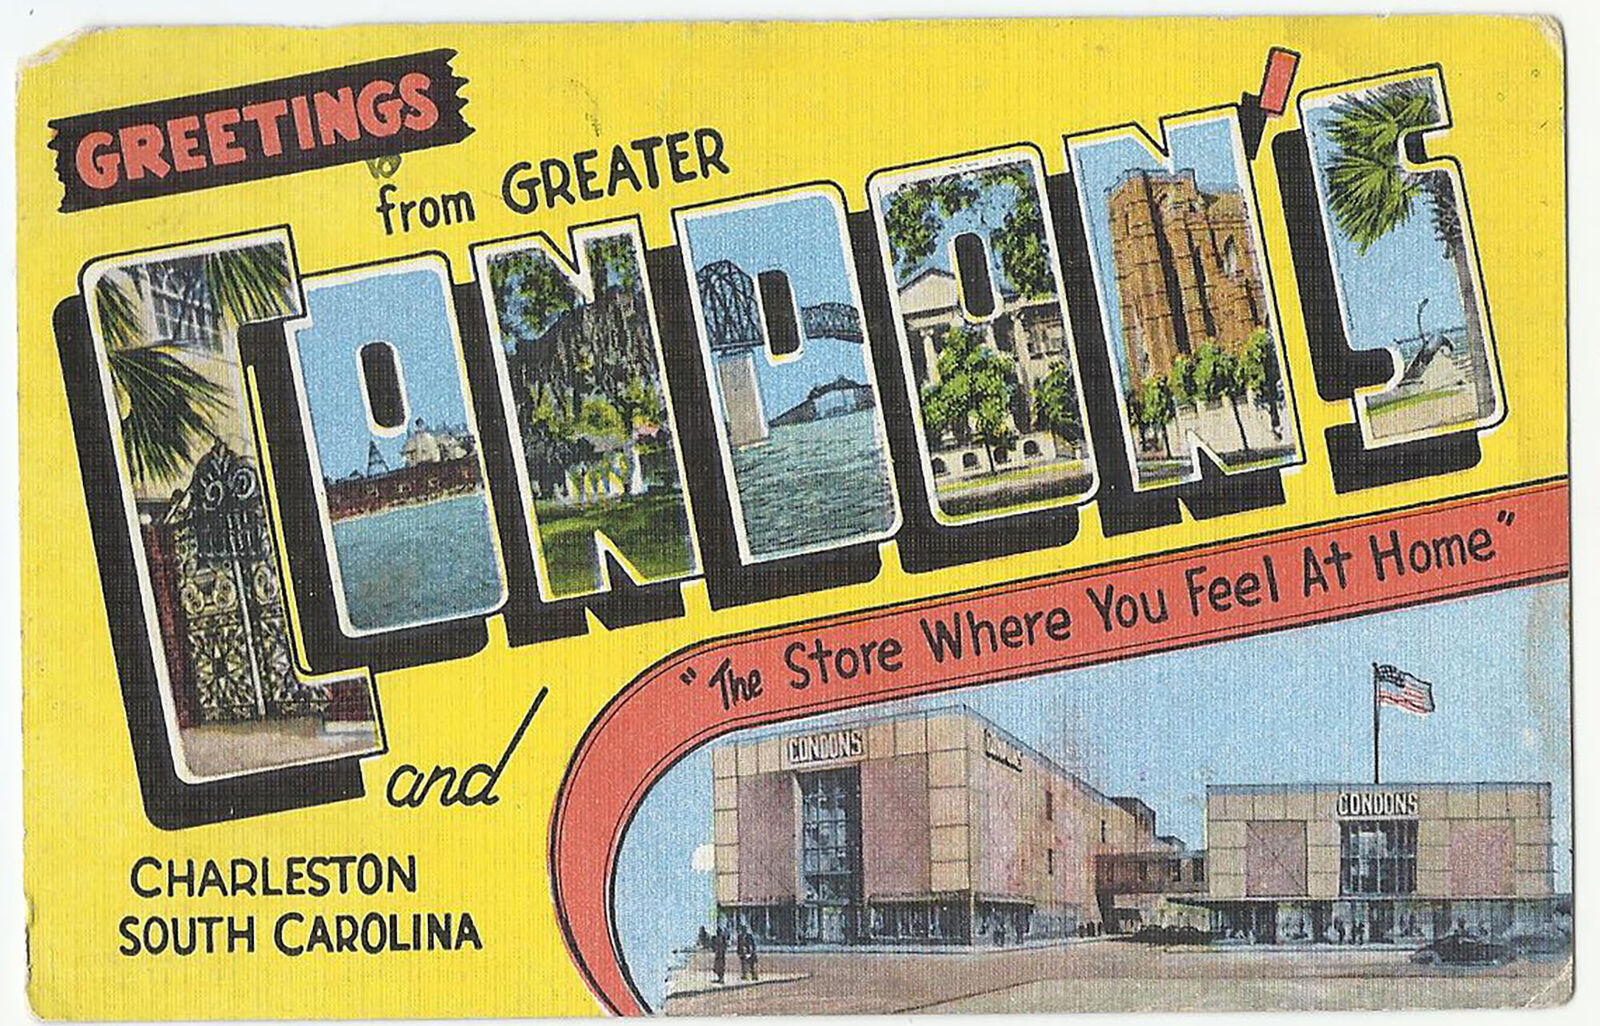 Greater Condon\'s Department Store, Greeting PC, Charleston South Carolina, 1950s